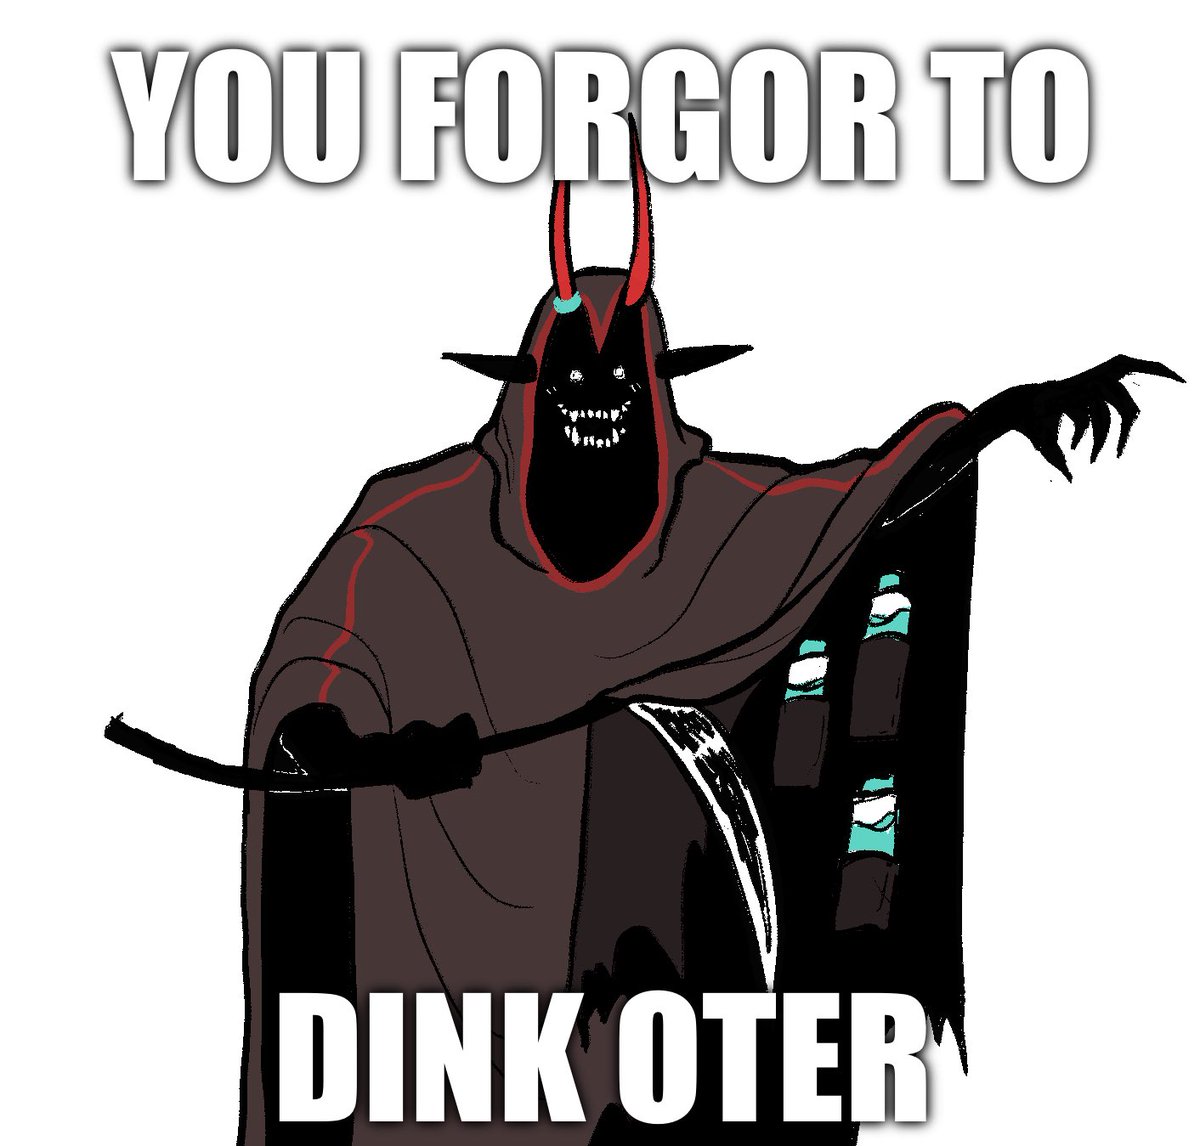 The Grim Reaper is here to discuss about your kidneys

#badboyhalofanart #QSMP #qsmpfanart #qsmp